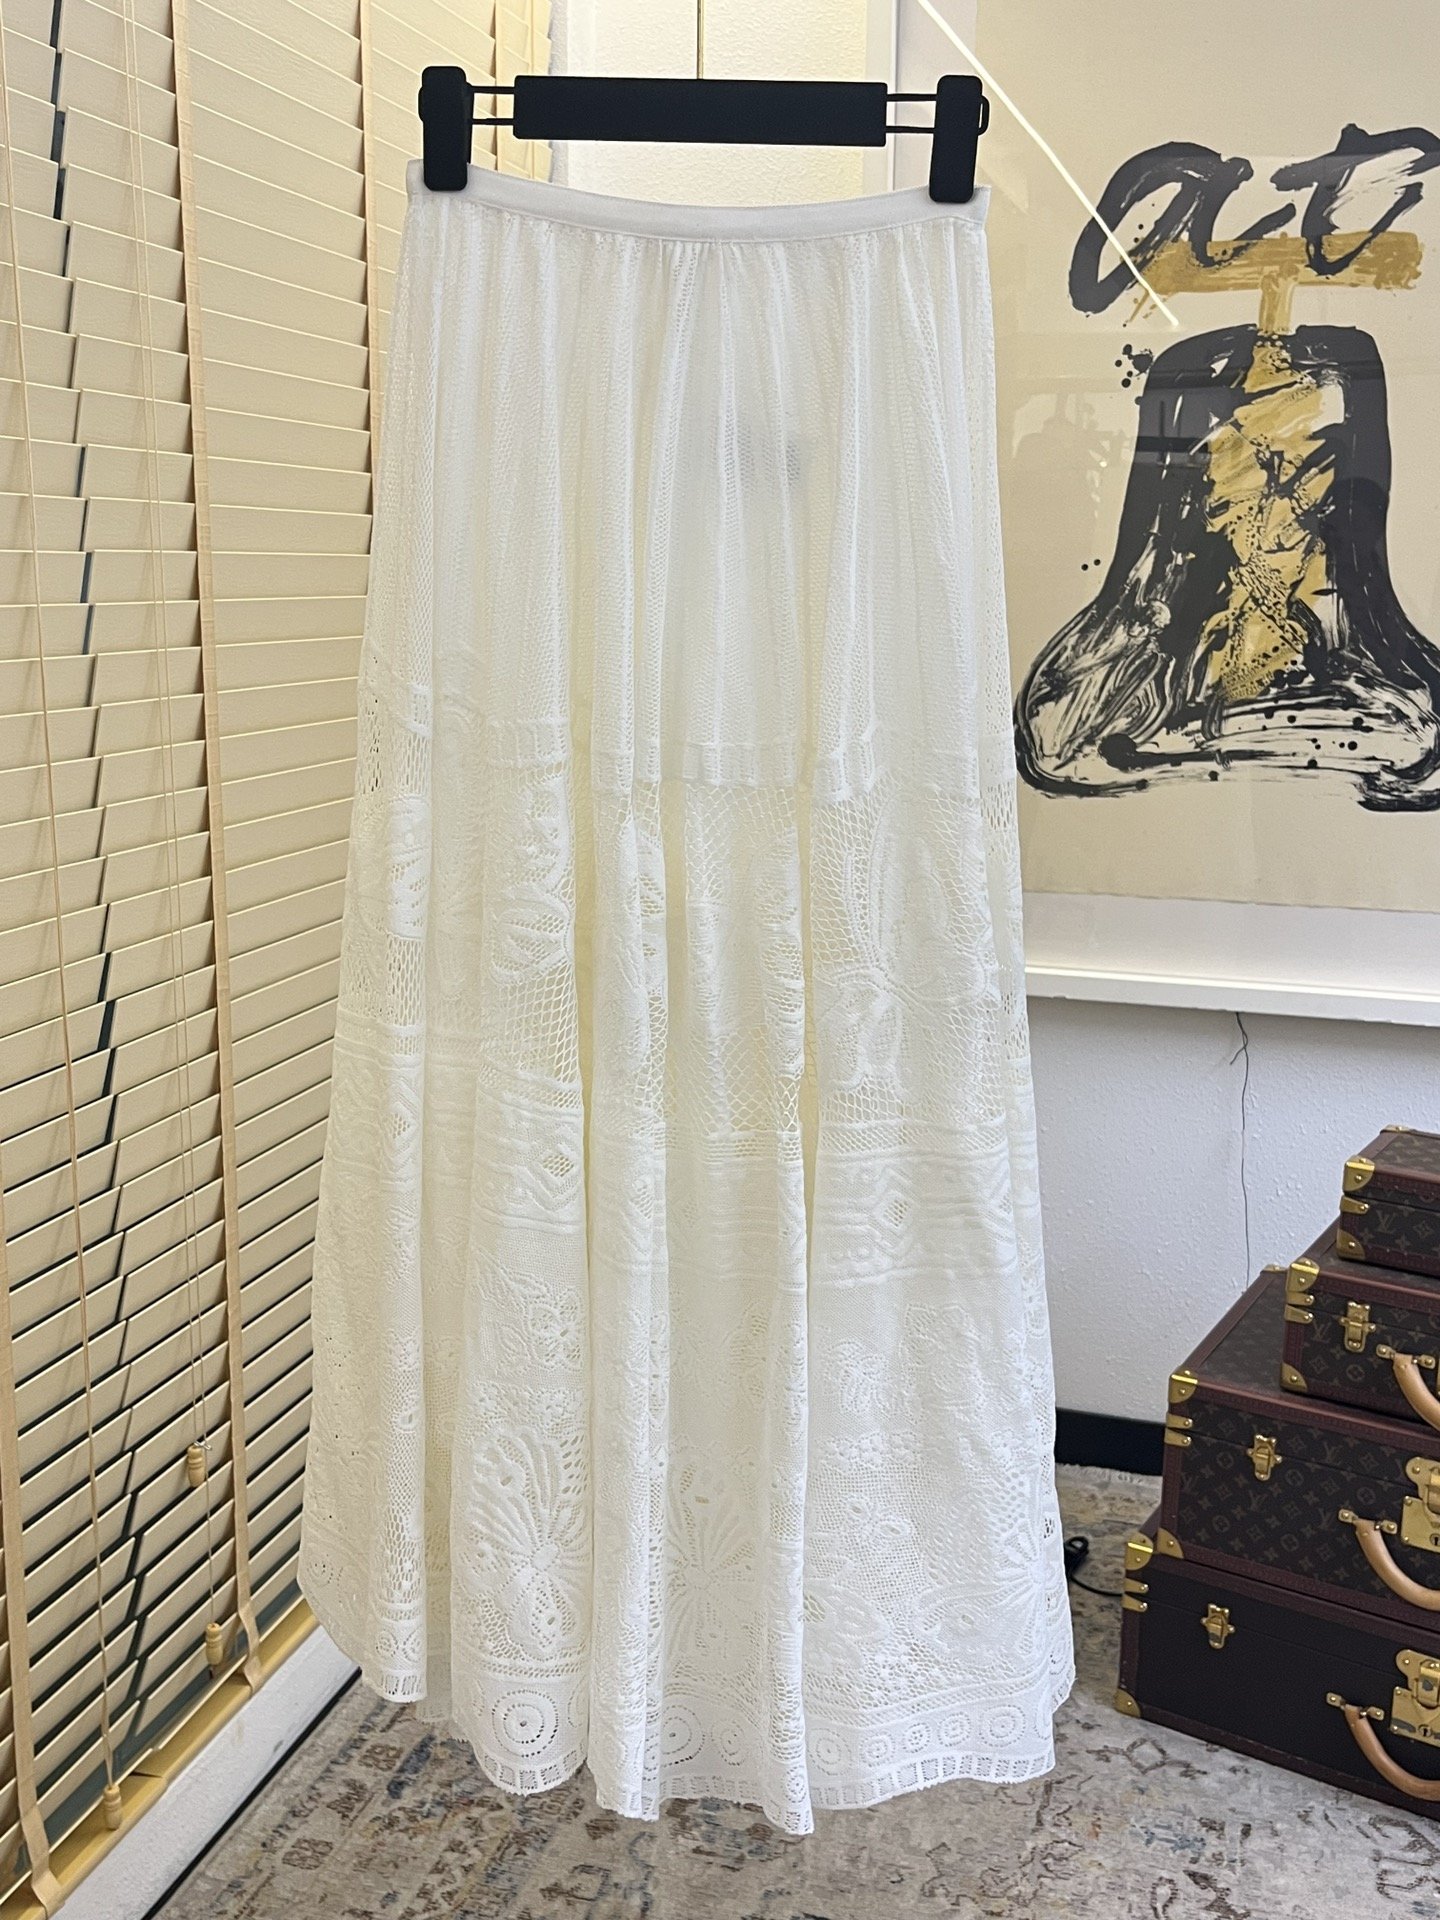  D家最新蝴蝶蕾丝半裙 清冷又高级 高品质原版出品 气质提升必备半裙36-SD